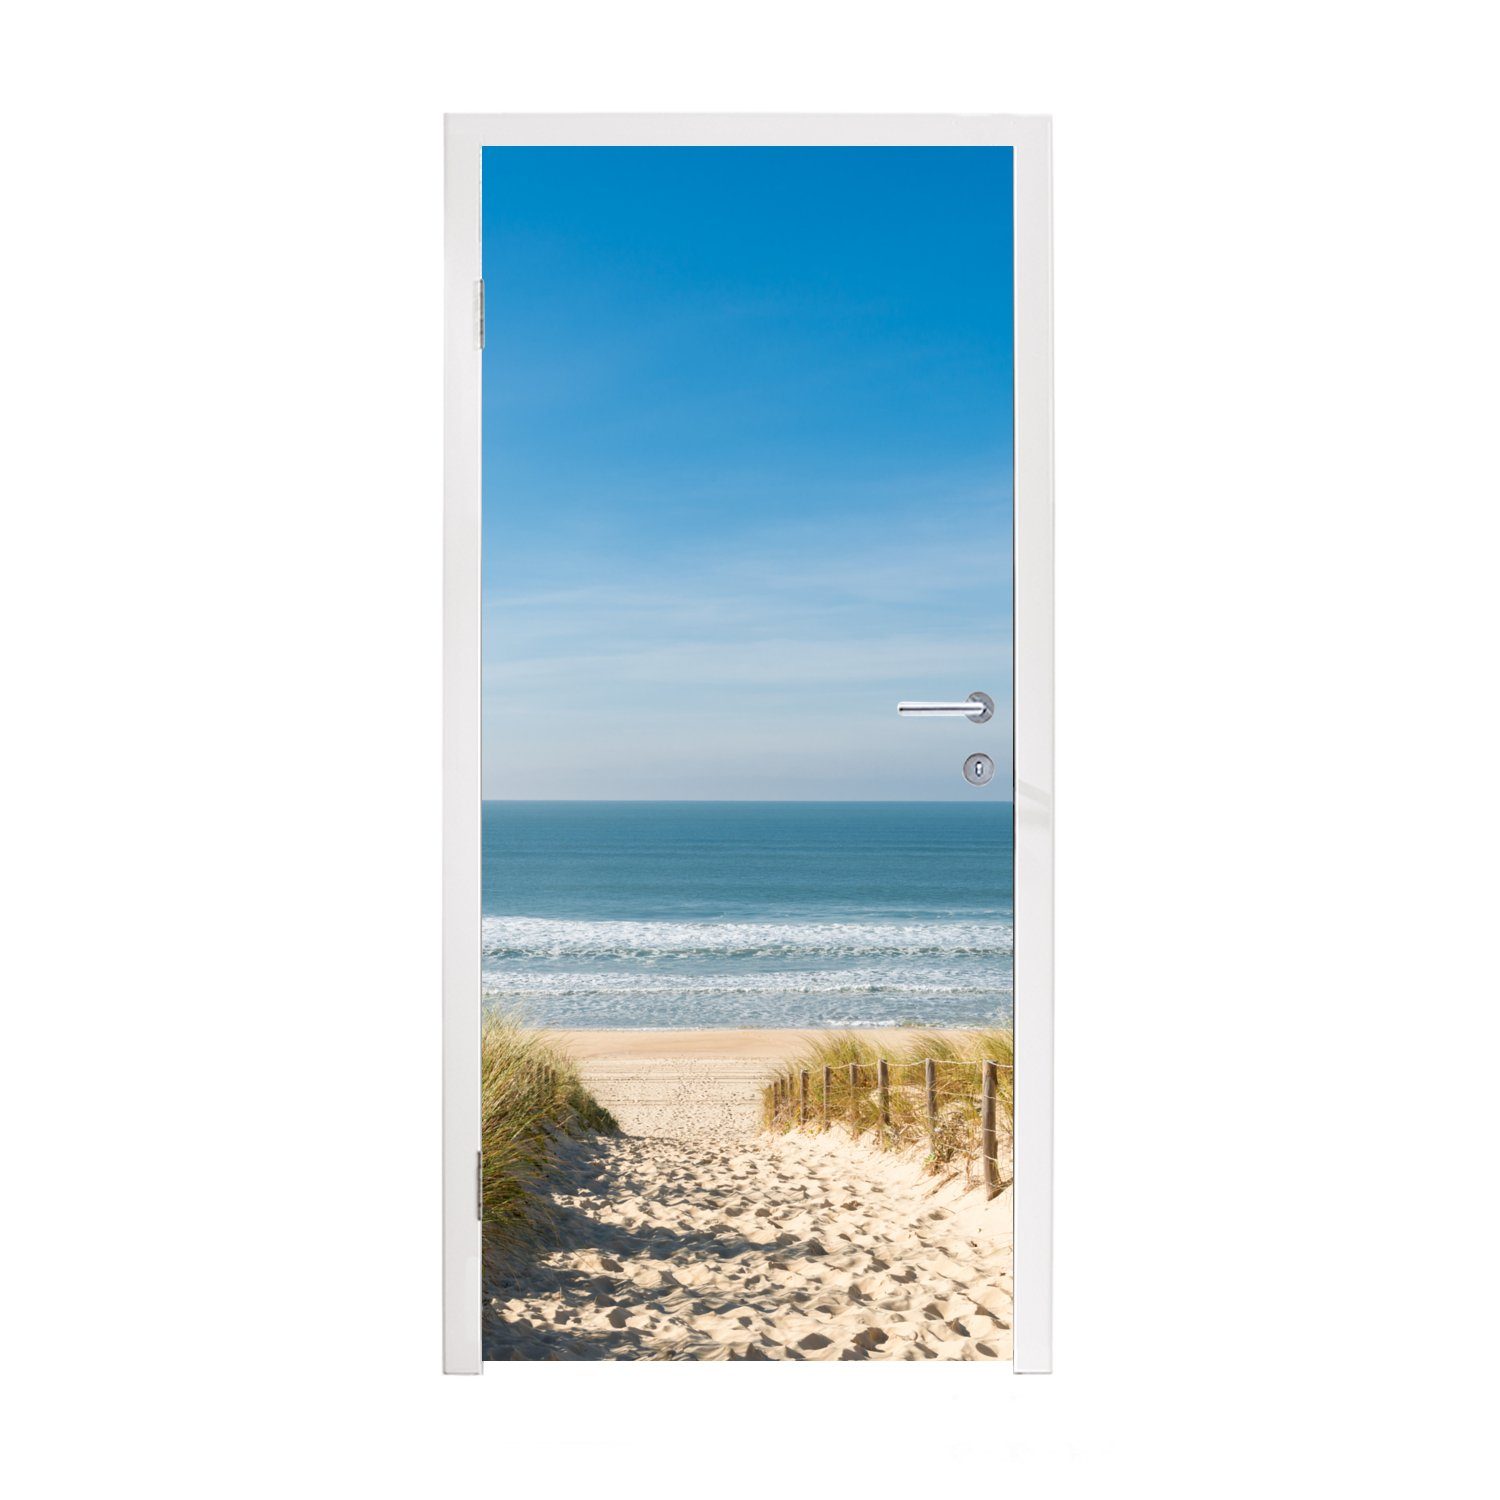 MuchoWow Türtapete Strand - Meer - Düne - Sand - Sommer, Matt, bedruckt, (1 St), Fototapete für Tür, Türaufkleber, 75x205 cm